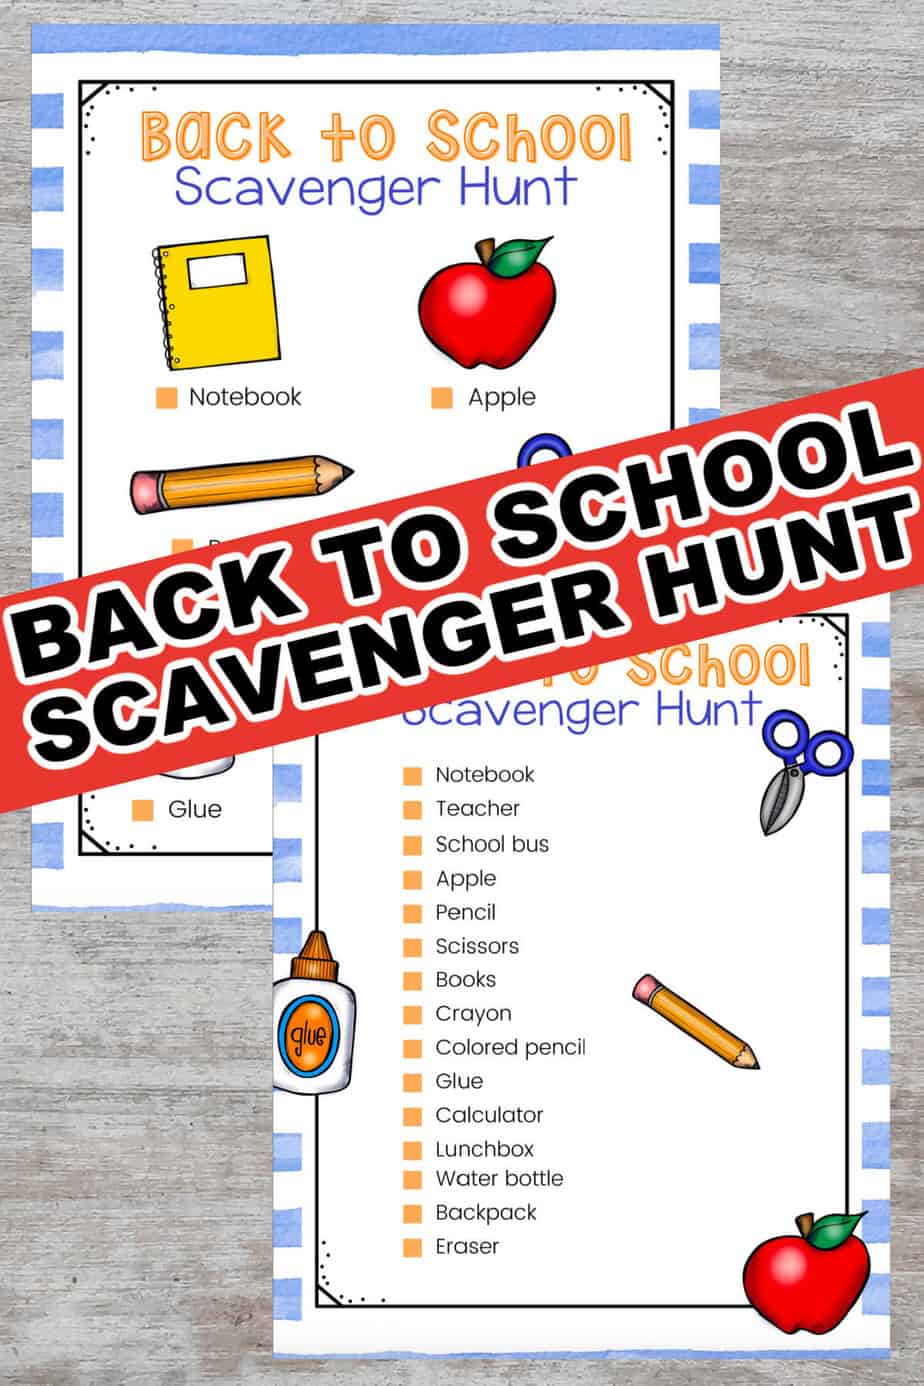 Back to school scavenger hunt printable